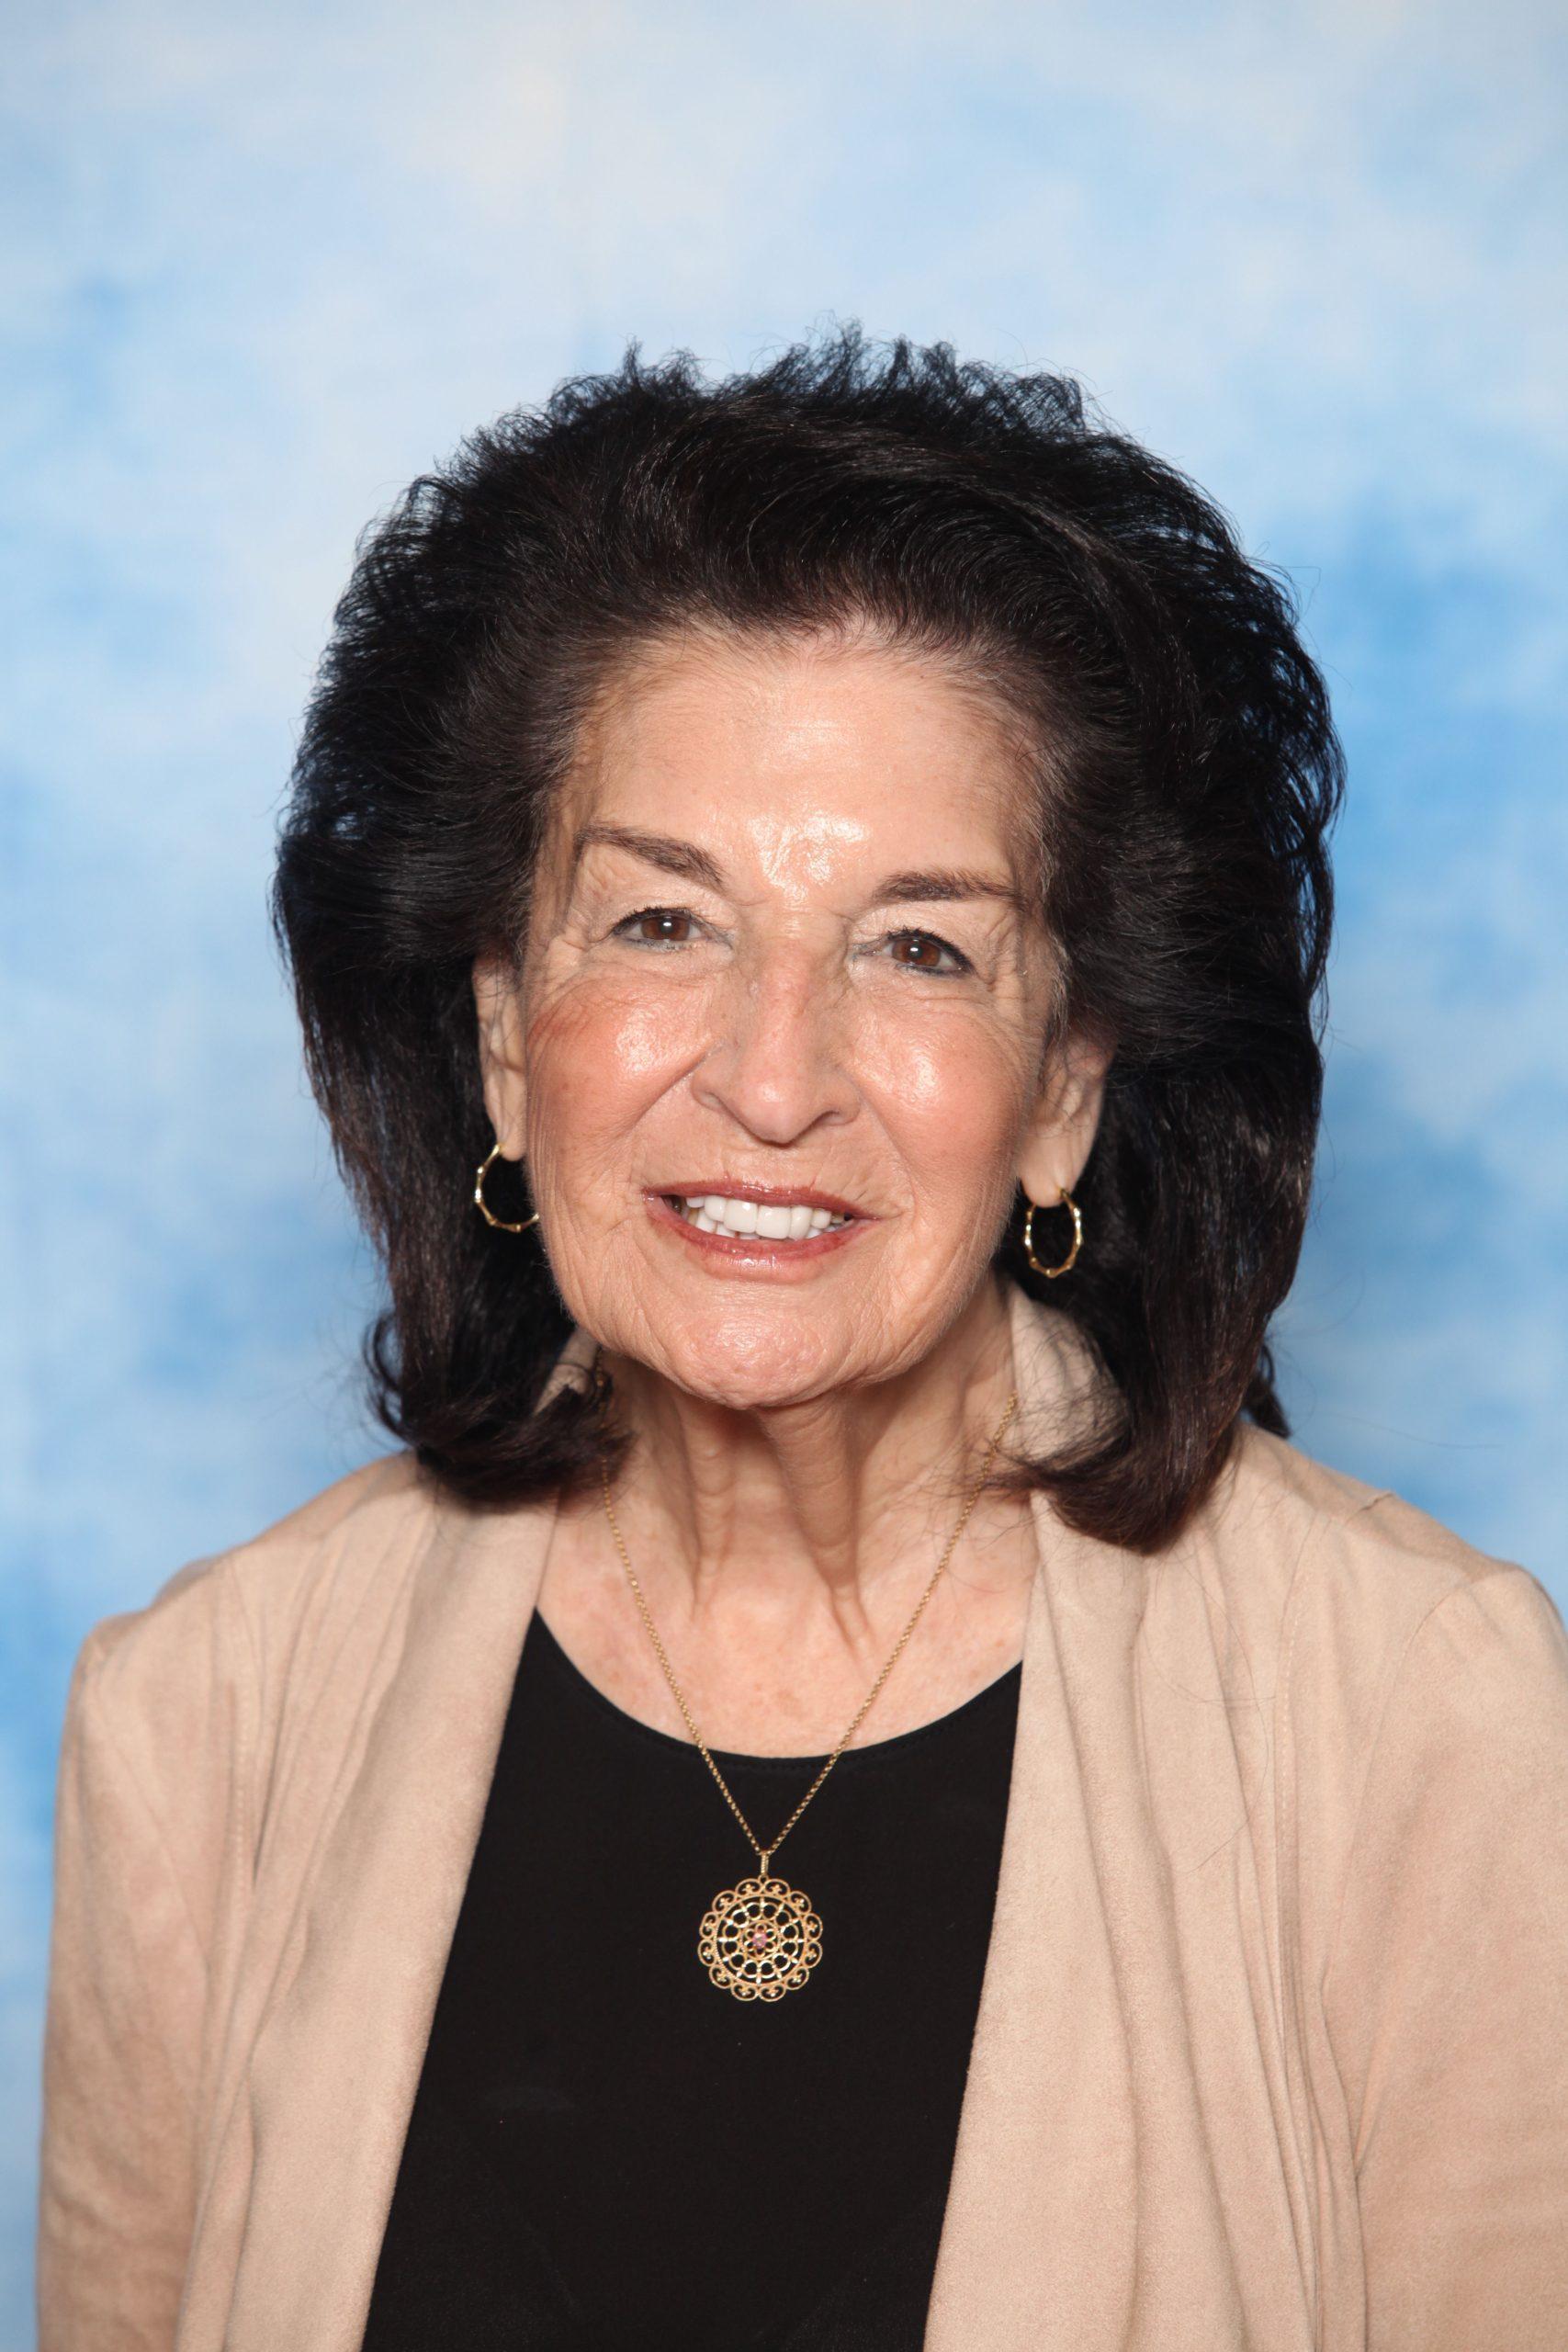 Ann Berg, Beth El Early Learning Center Faculty